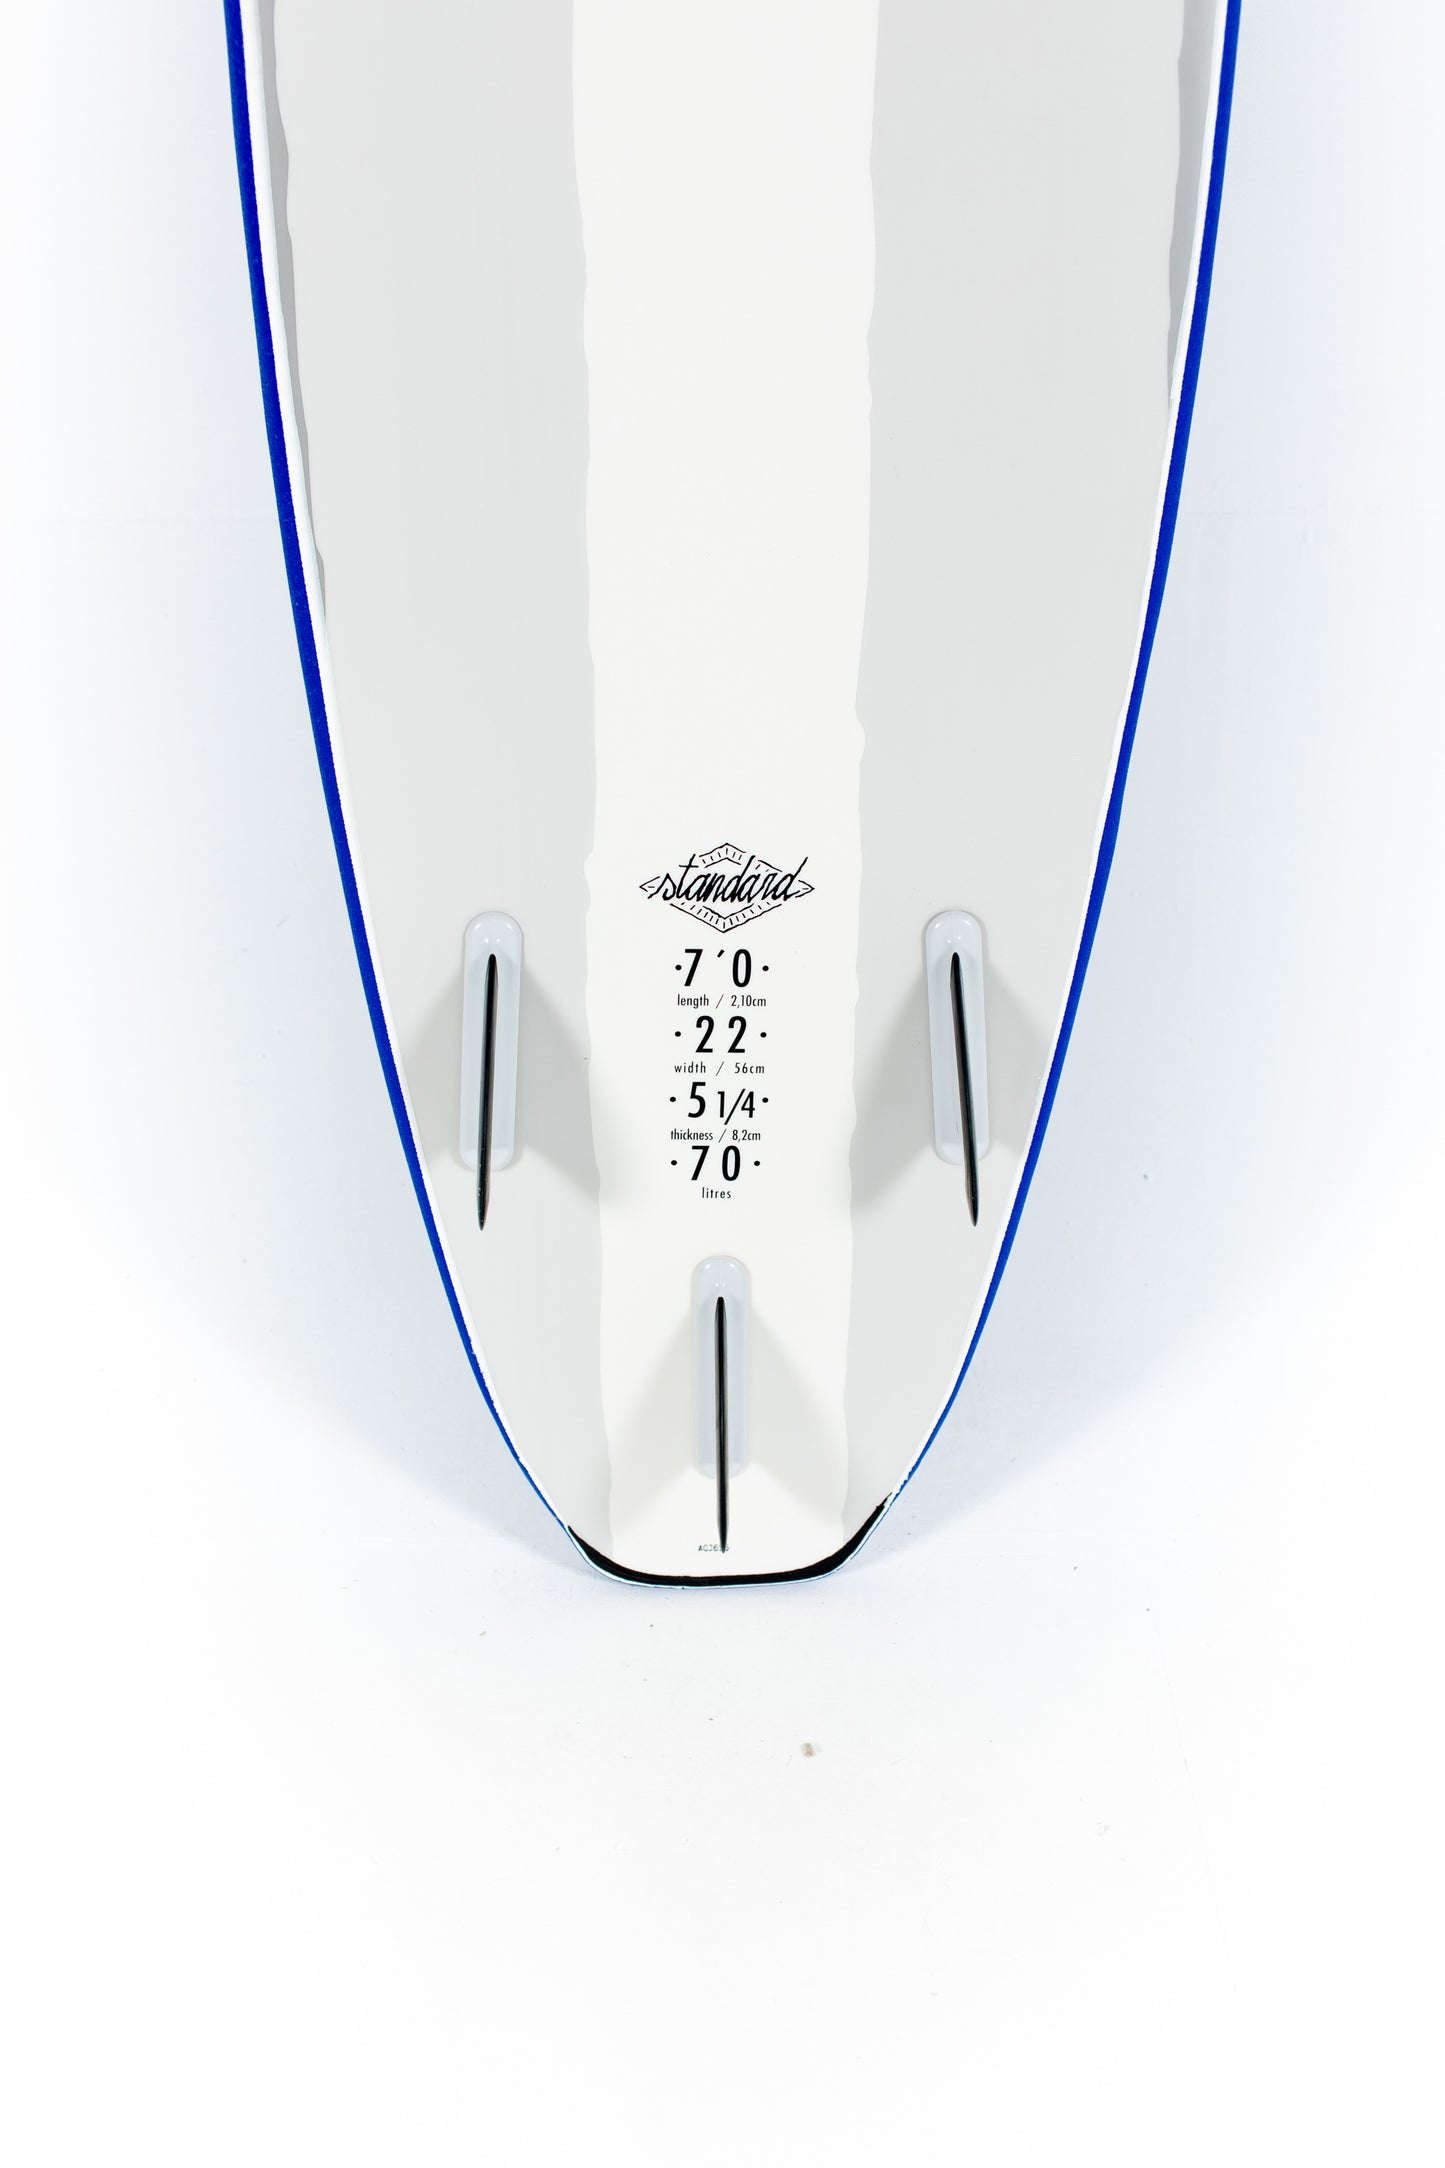 
                  
                    Pukas-Surf-Shop-Indio-Surfboards-Softboards-Standard
                  
                